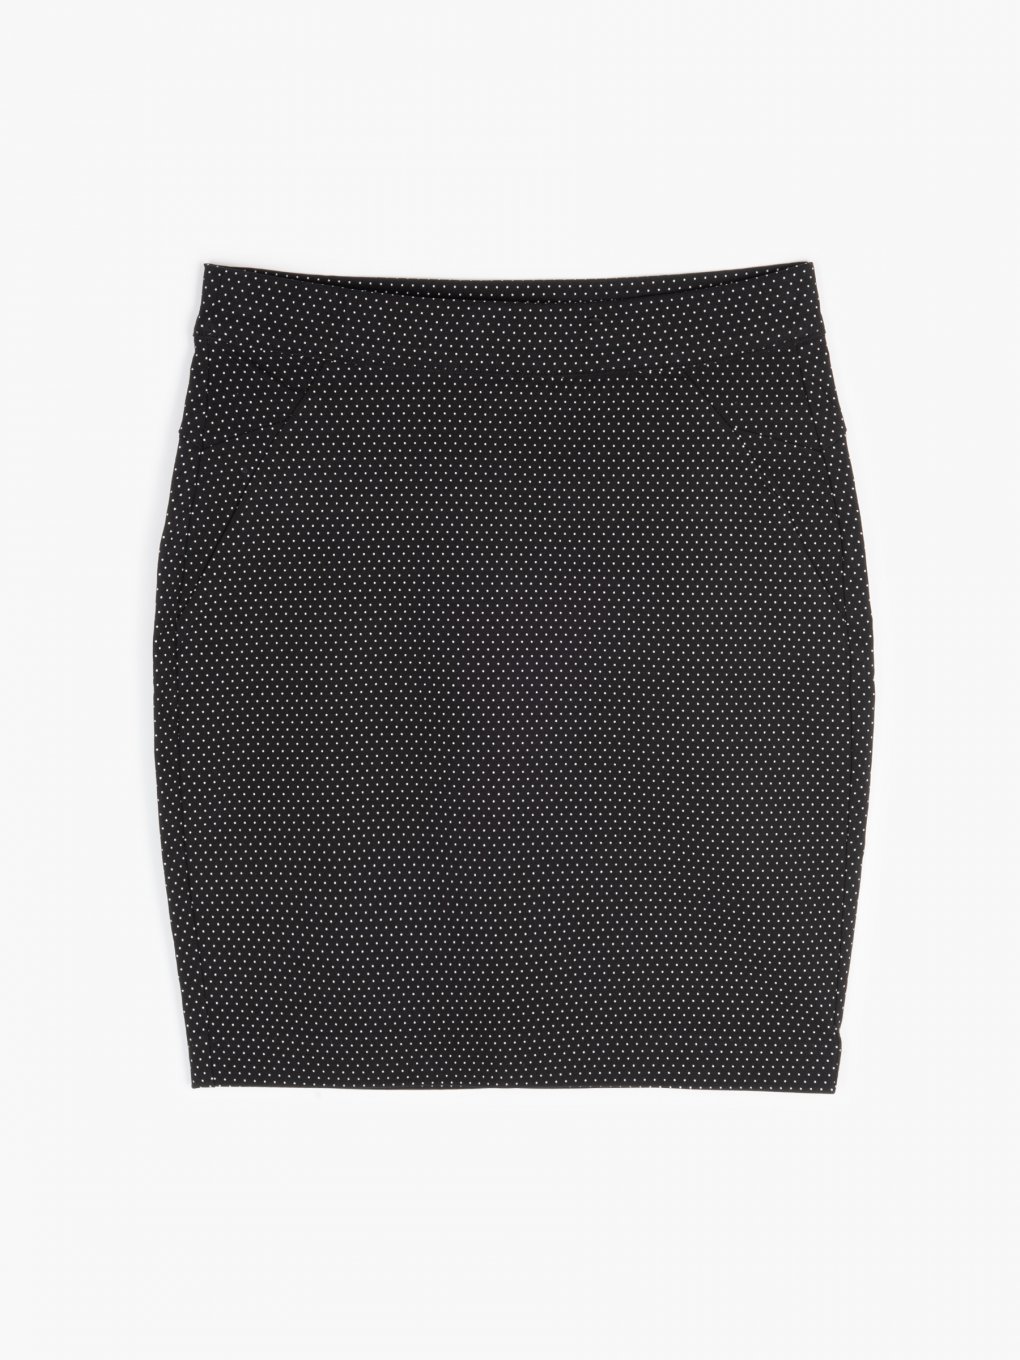 Polka dot print bodycon skirt